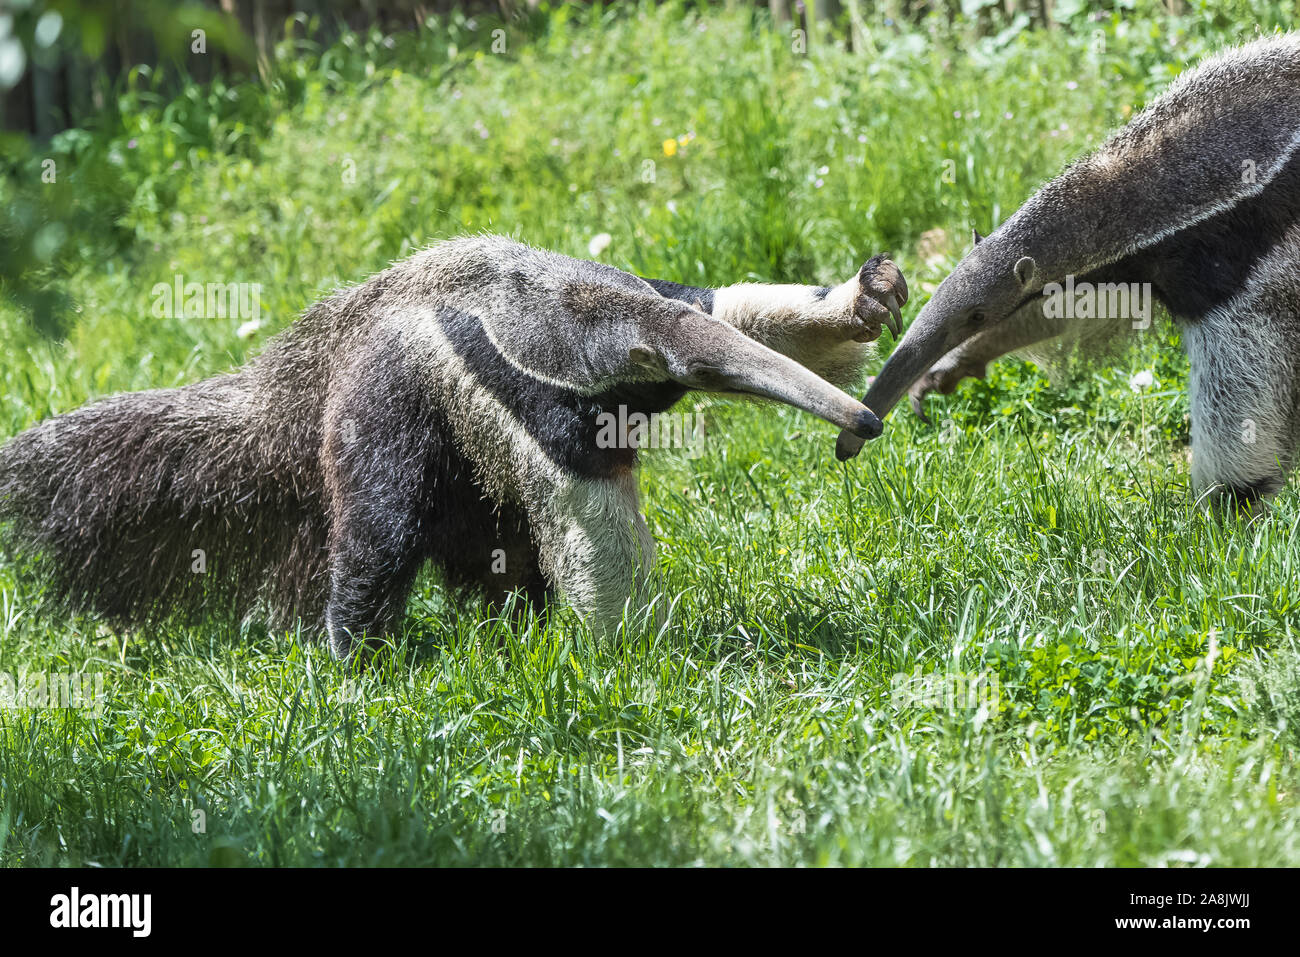 Giant Anteater, animals fighting Stock Photo